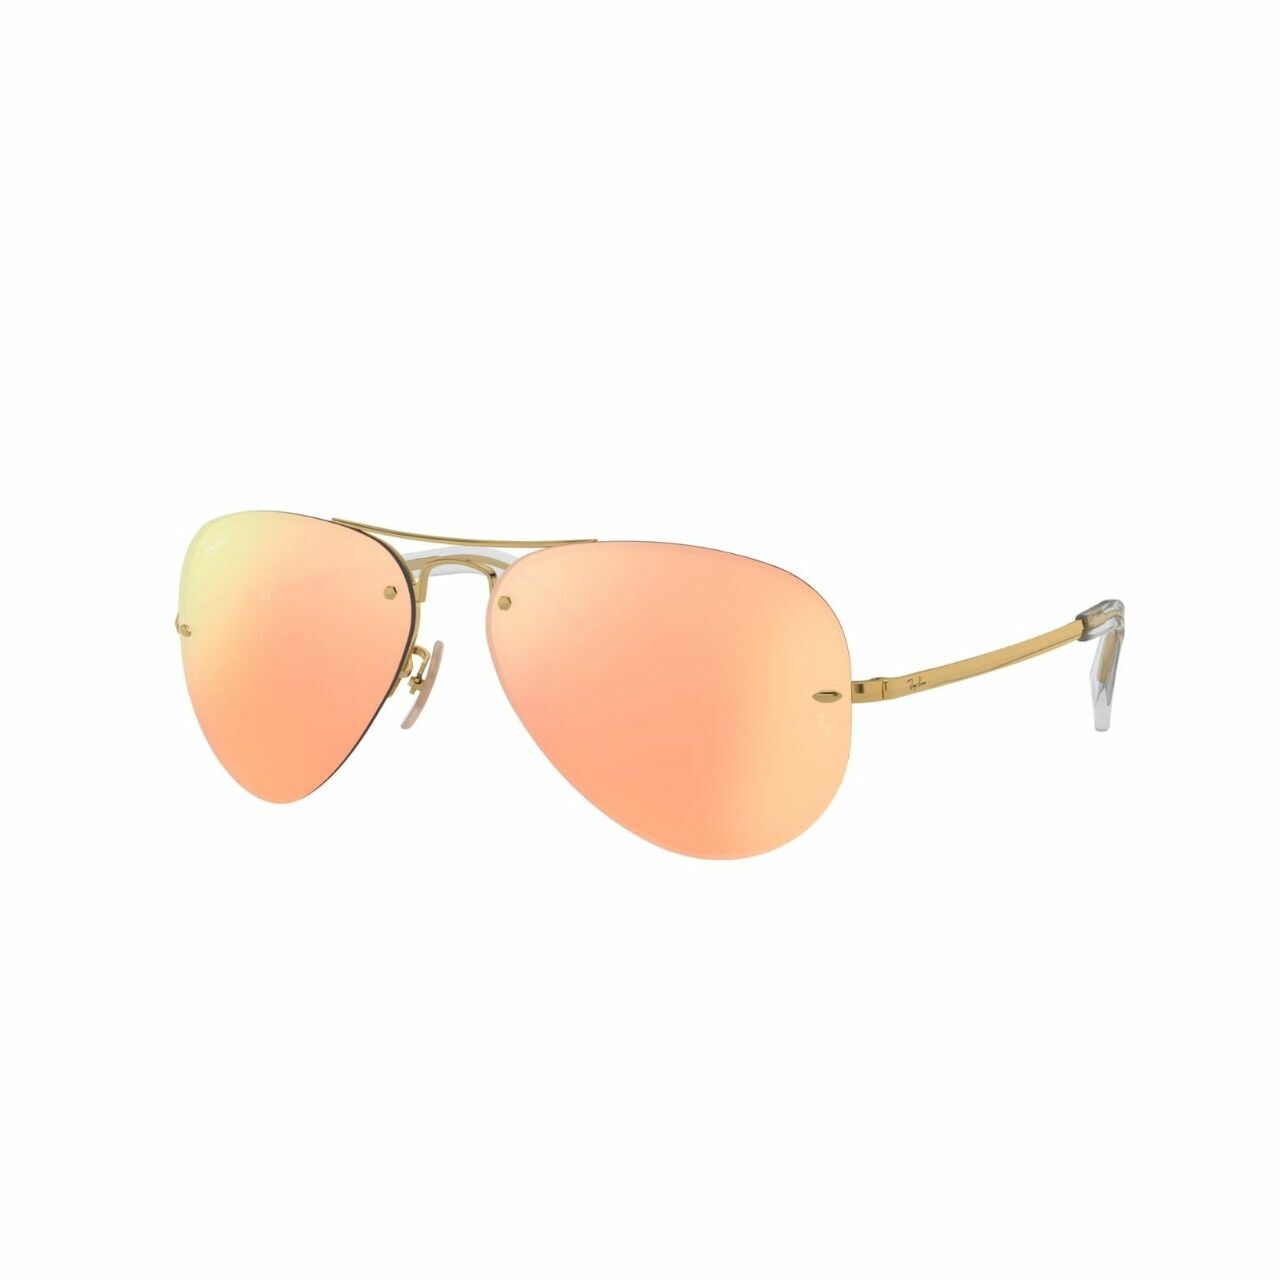 Ray-ban Arista Light Brown Mirror Pink Sunglasses